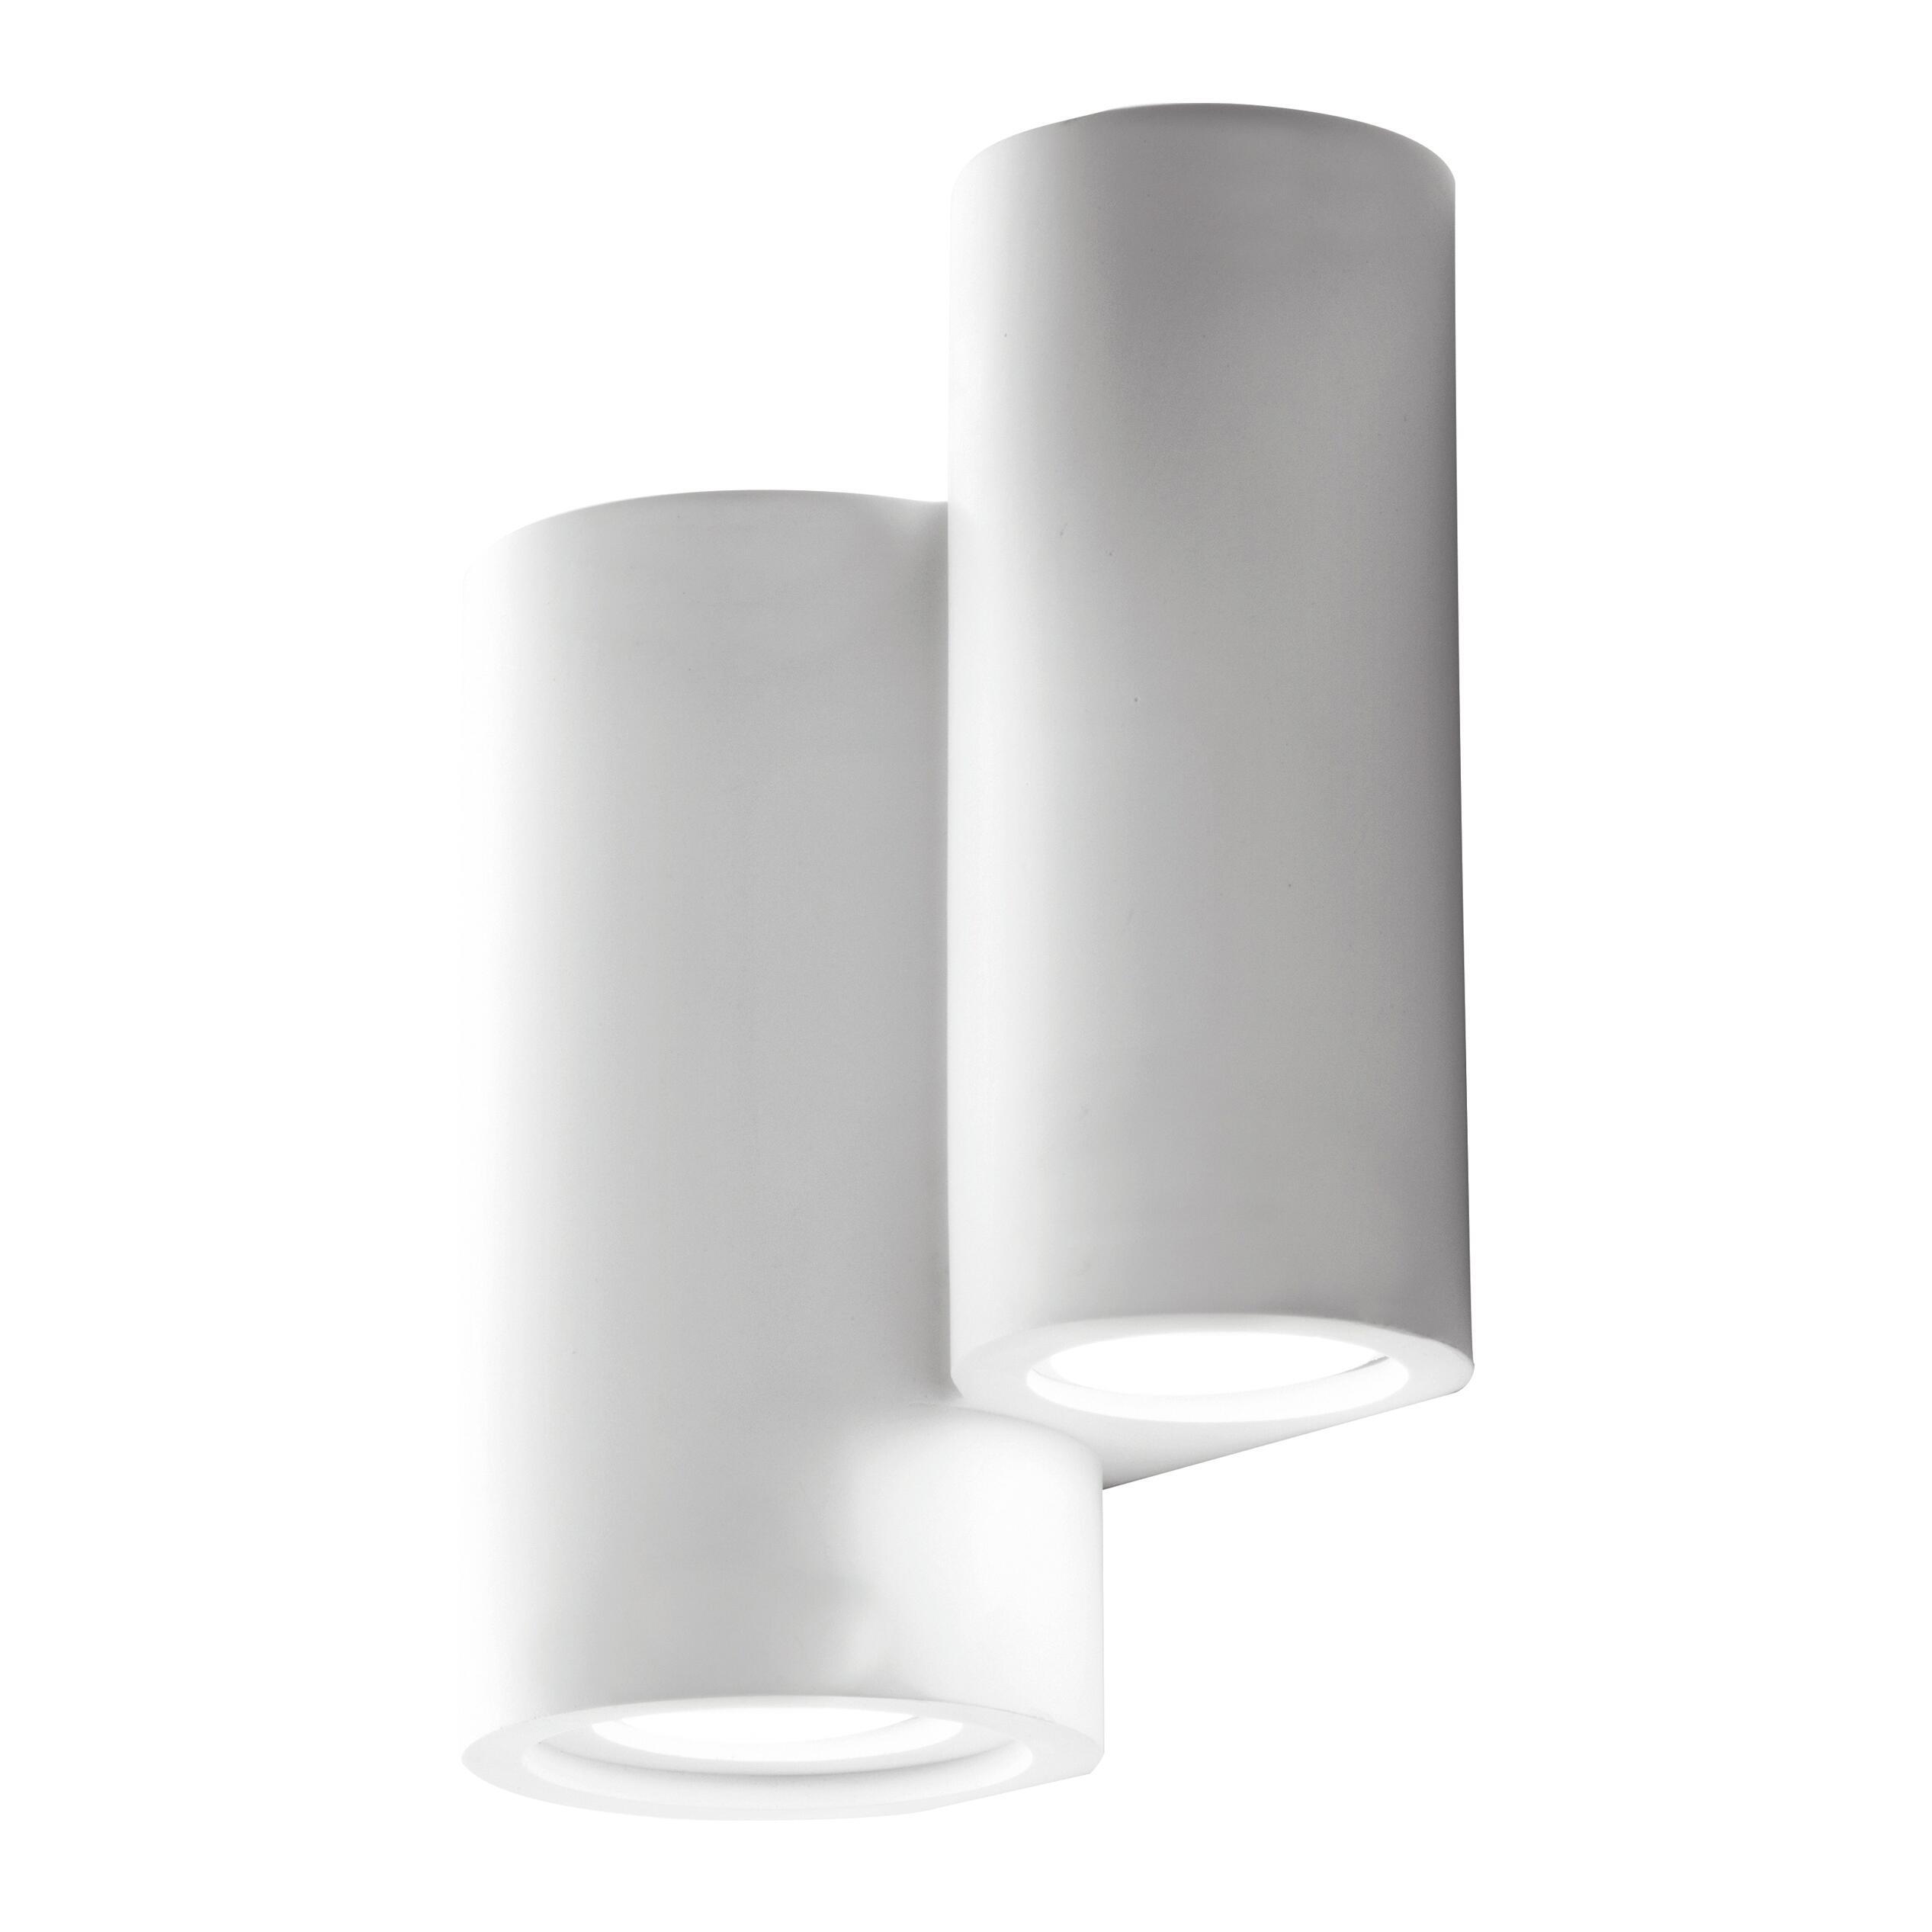 Applique design Banje bianco verniciabile, in gesso, D. 90 cm 21 x 16 cm, 4 luci INTEC - 3